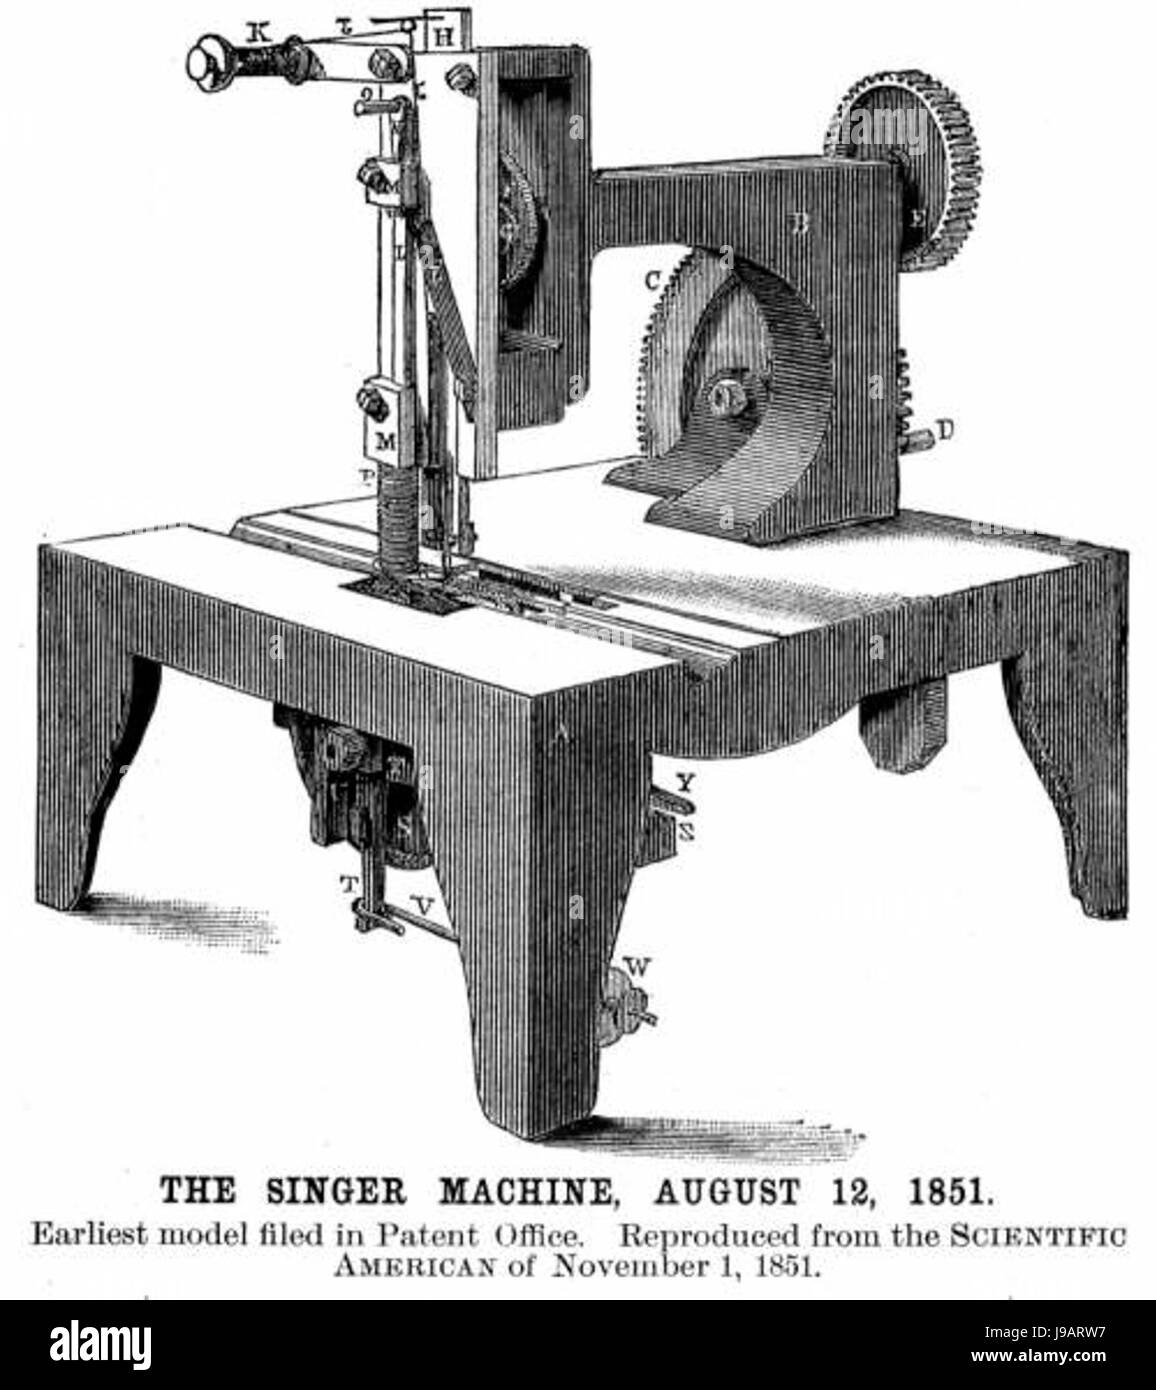 Singer macchina da cucire 1851 Foto stock - Alamy